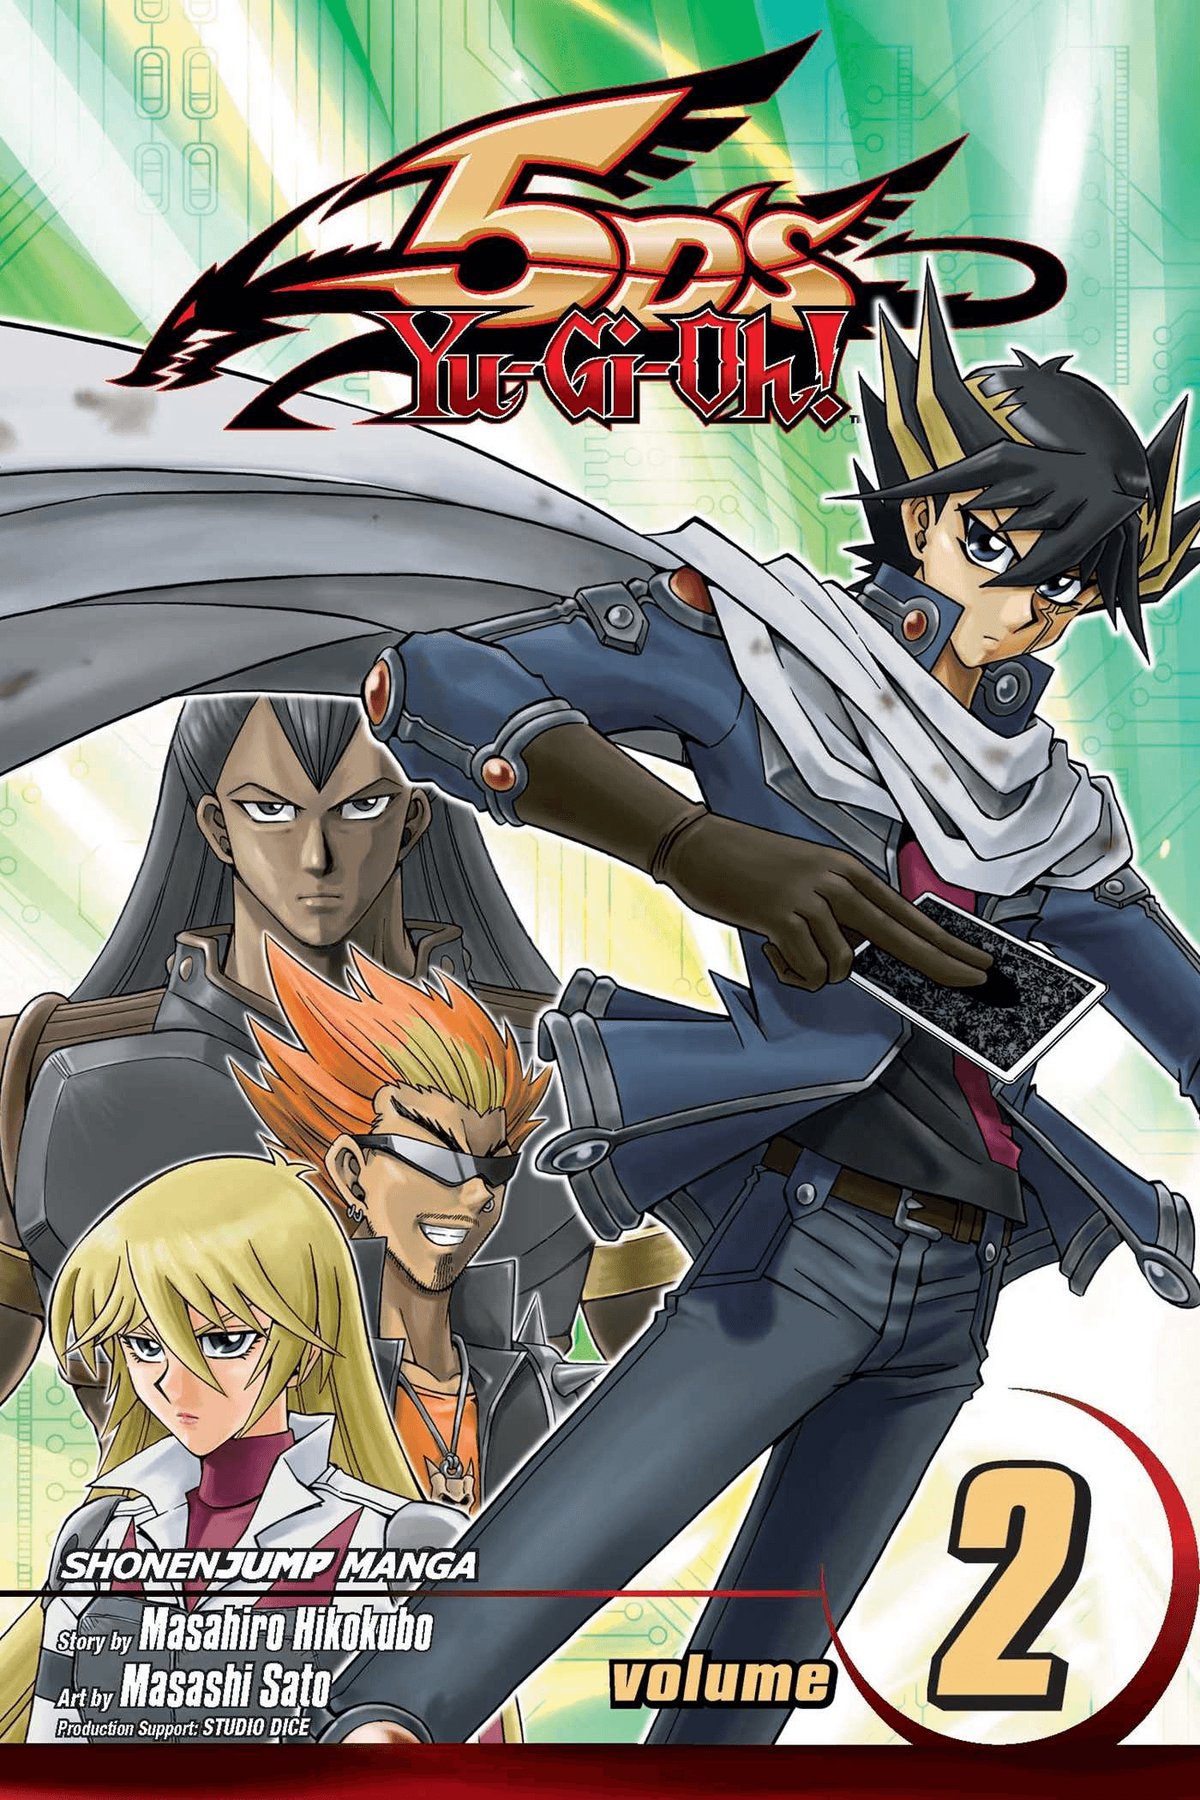 Yu-Gi-Oh! 5D's Vol. 07 w/ CCG (Manga) - Entertainment Hobby Shop Jungle